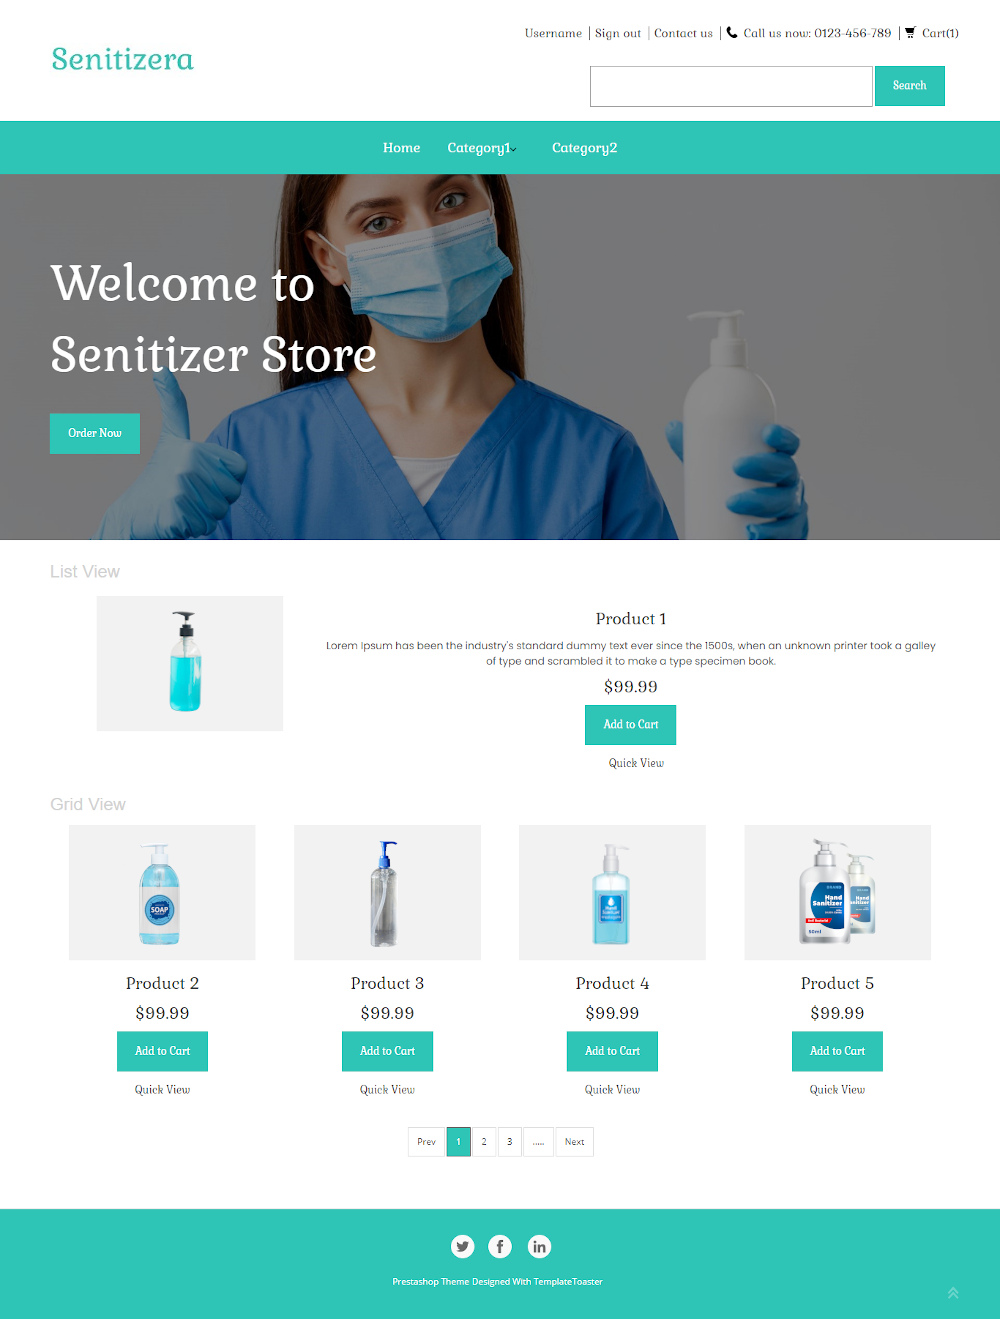 Senitizera - Online Senitizer Store PrestaShop Theme